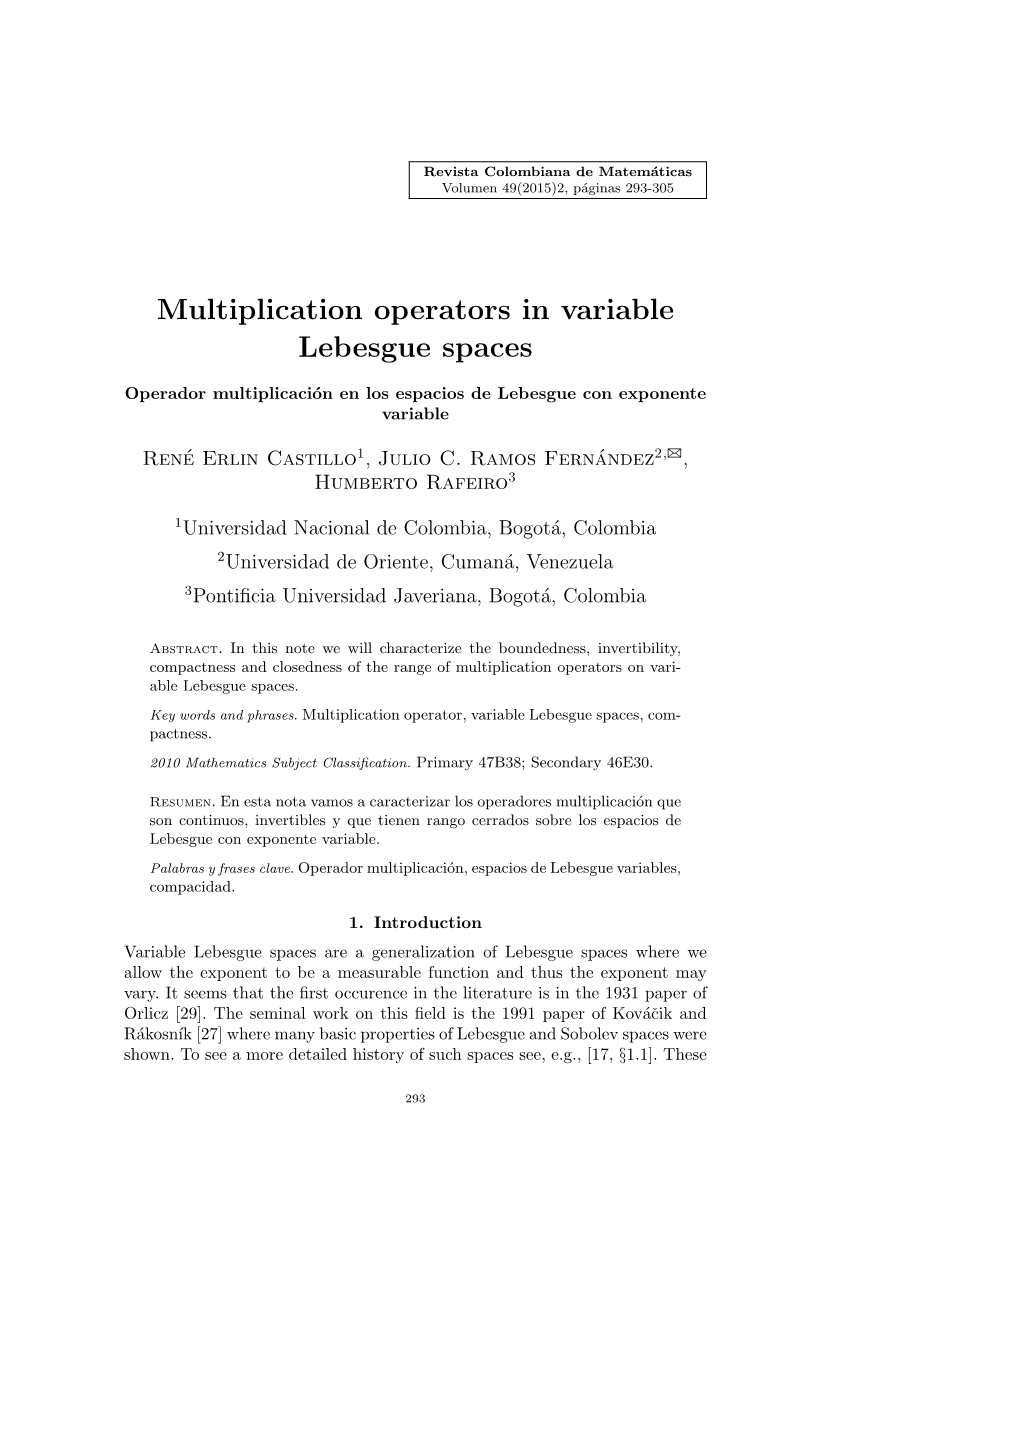 Multiplication Operators in Variable Lebesgue Spaces